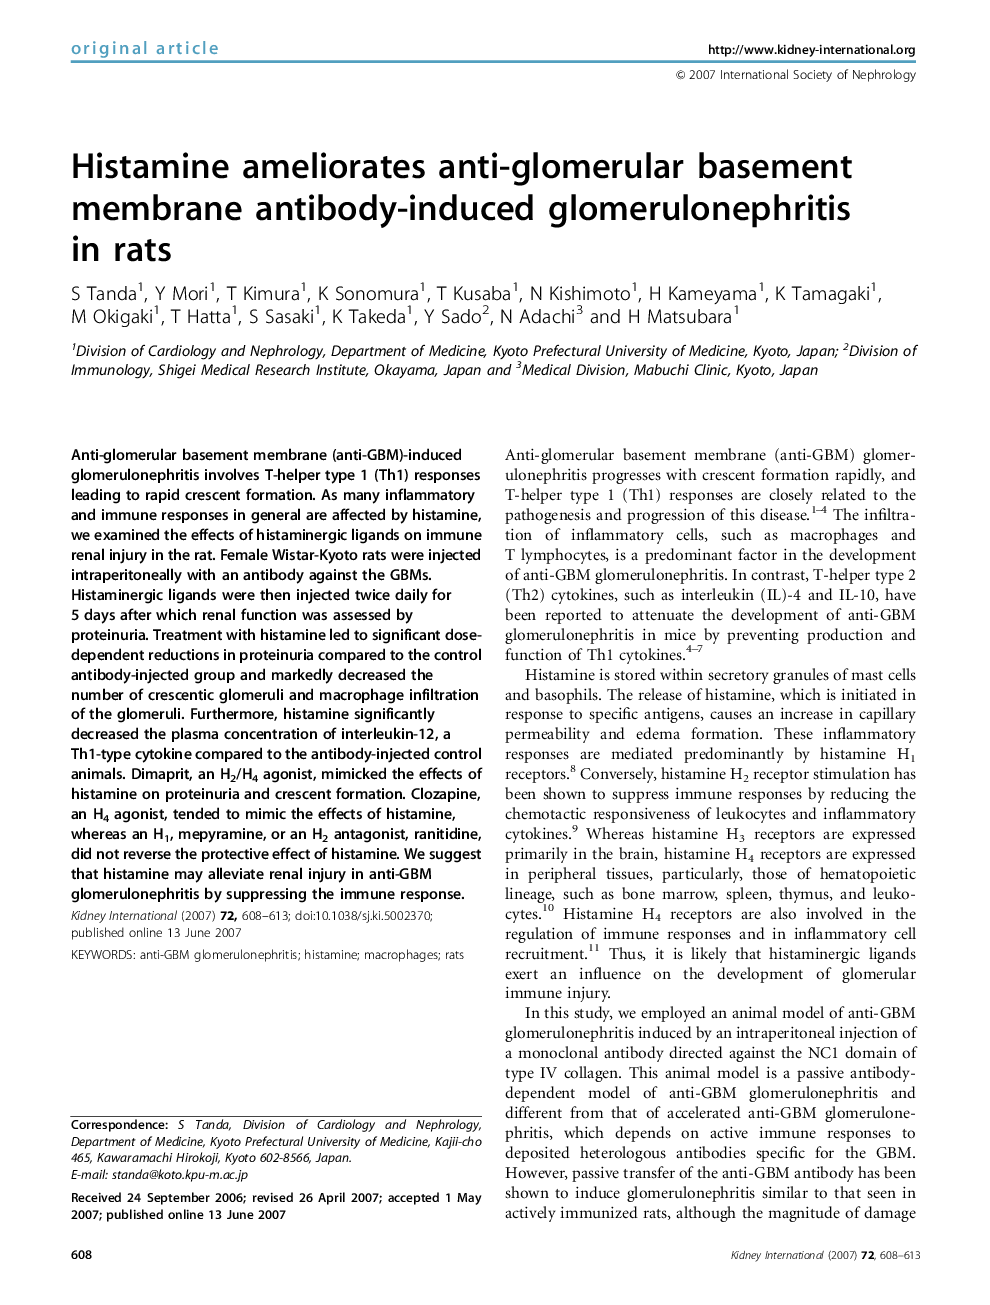 Histamine ameliorates anti-glomerular basement membrane antibody-induced glomerulonephritis in rats